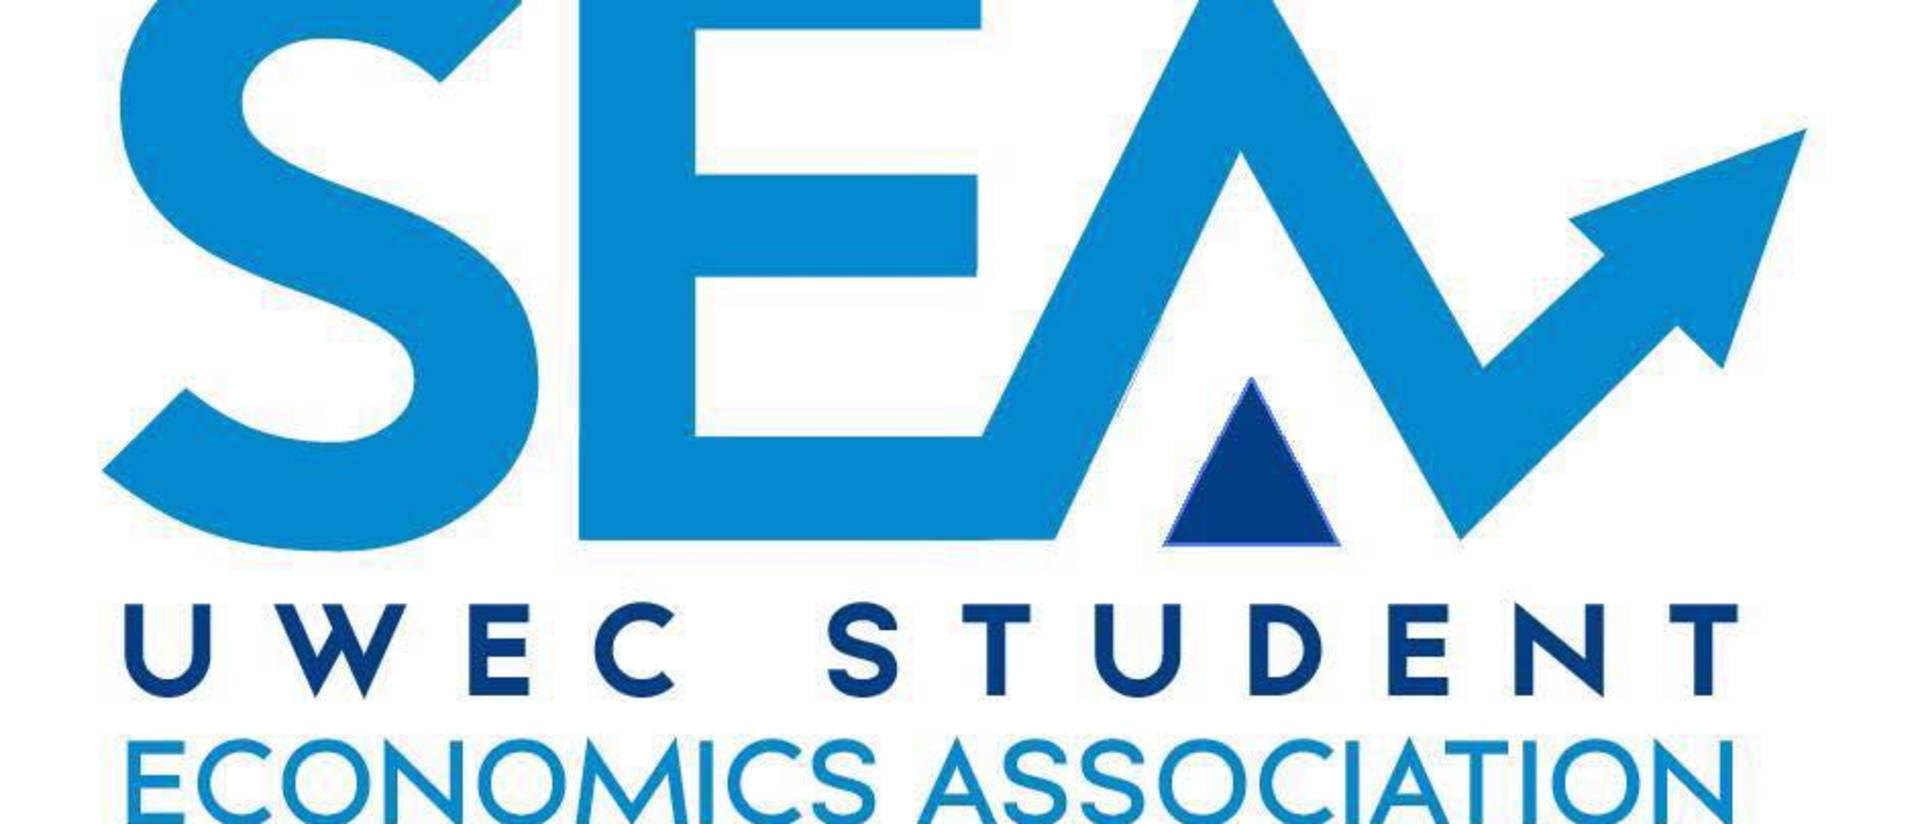 Student Economics Association